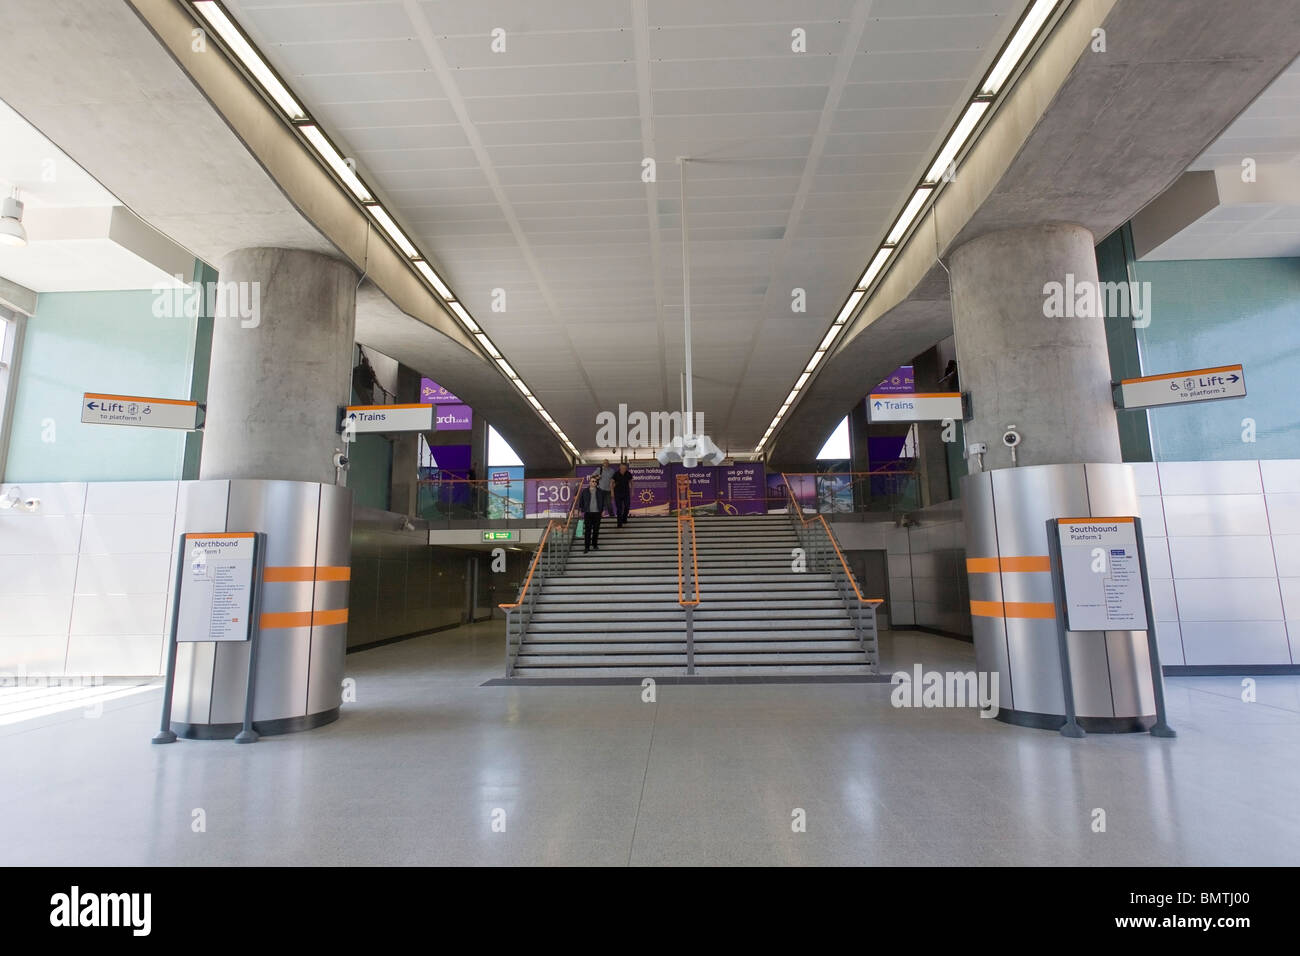 New Shoreditch High Street Station,  London Overground TFL Stock Photo